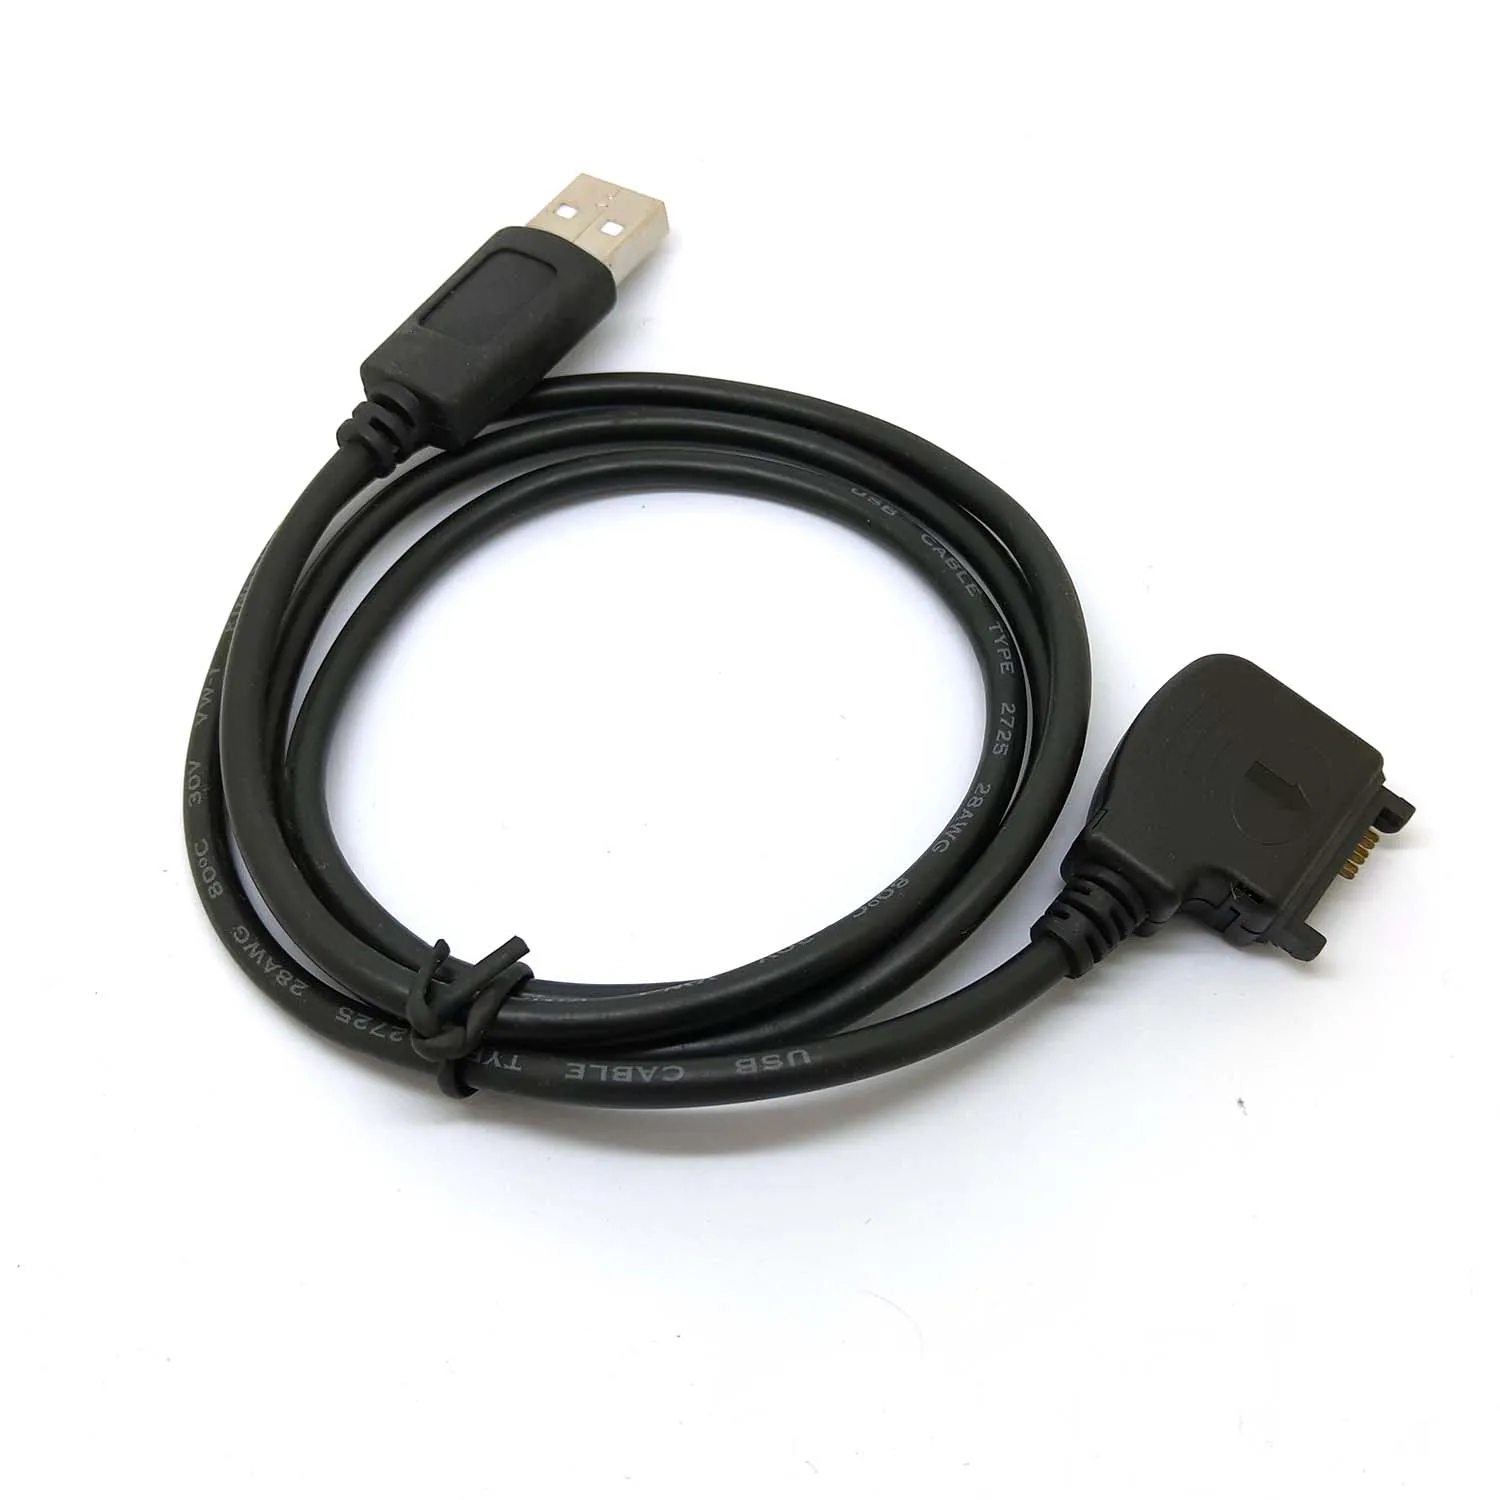 USB кабель для передачи данных dku-2 CA-53 для NOKIA N70 N72 N73 3100 6100 3120 3108 6108